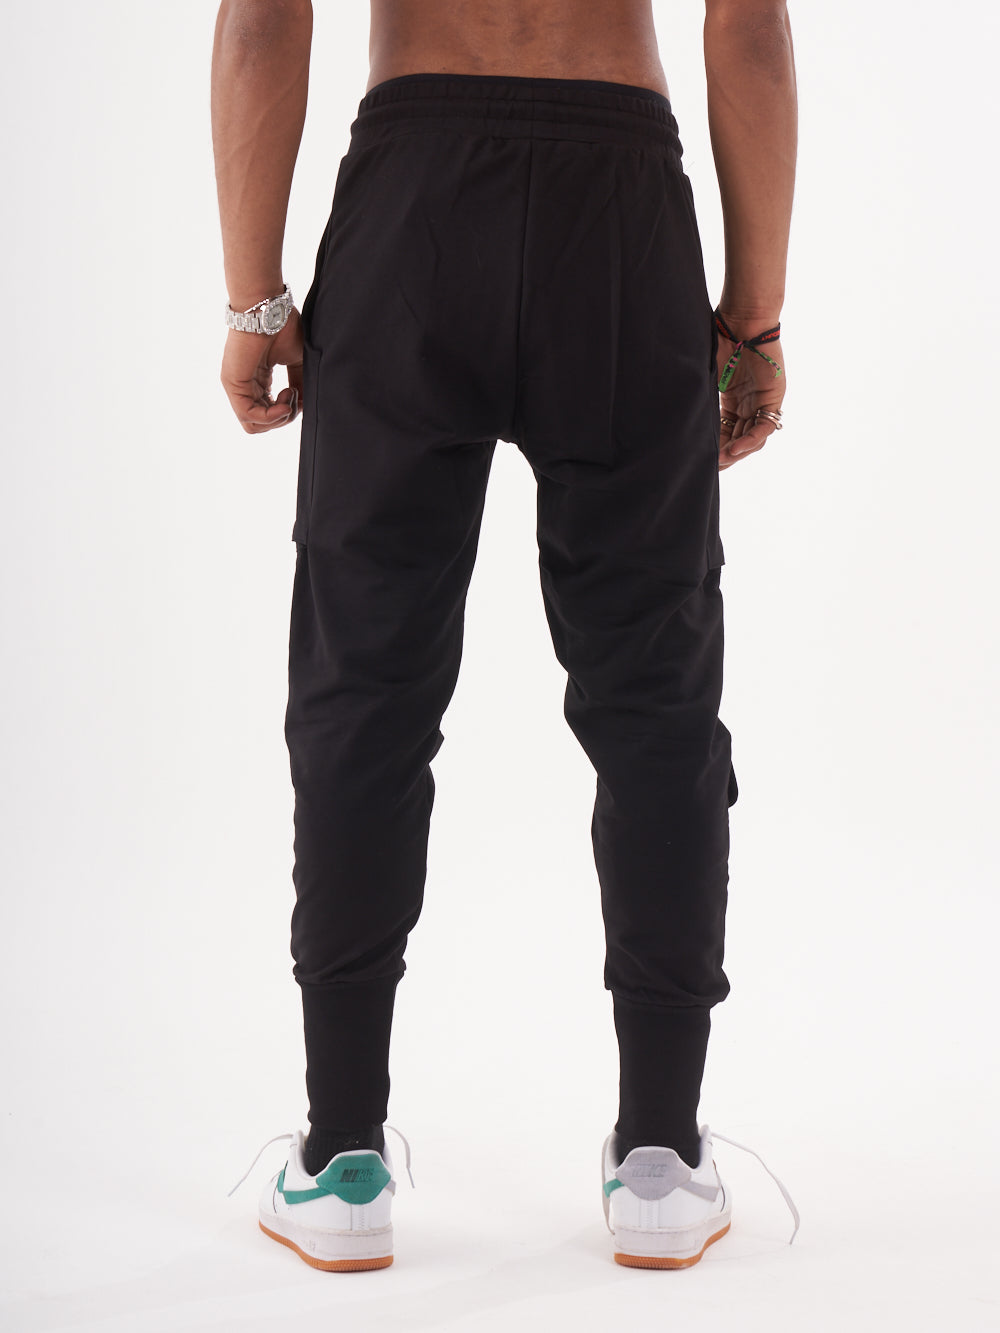 The back view of a man wearing GUERRILLA | BLACK jogger pants.